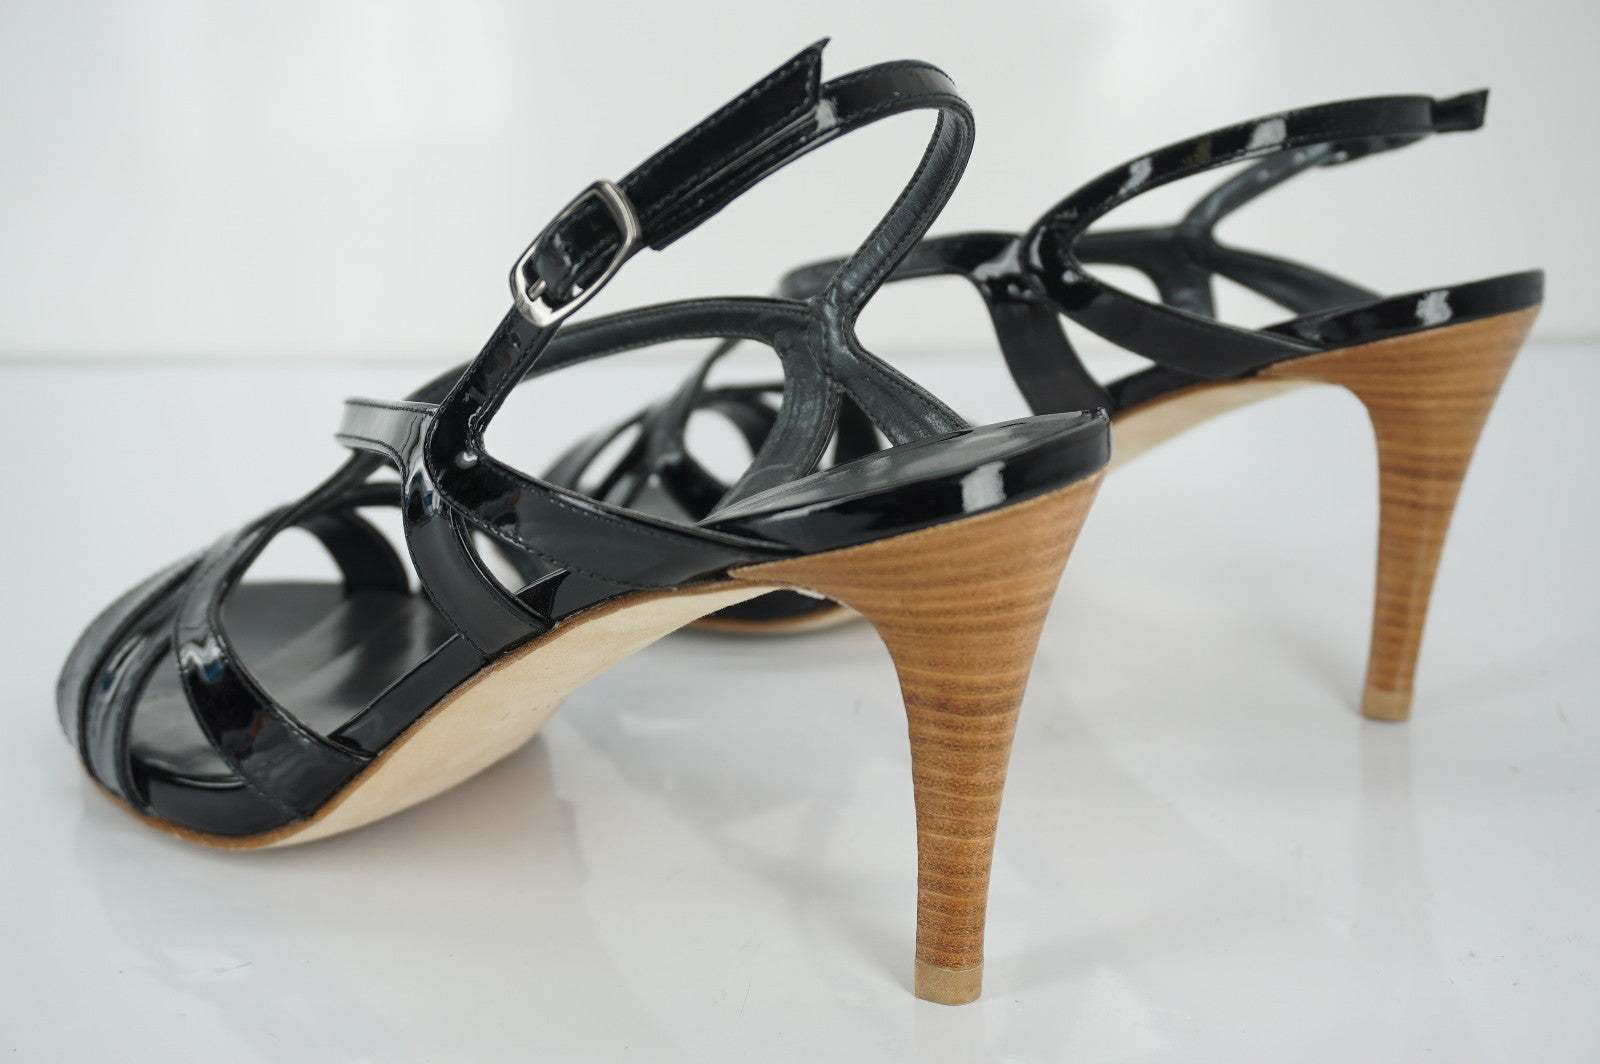 Stuart Weitzman Black Patent Leather Operetta Strappy Sandals Size 8 NIB $375 Sz